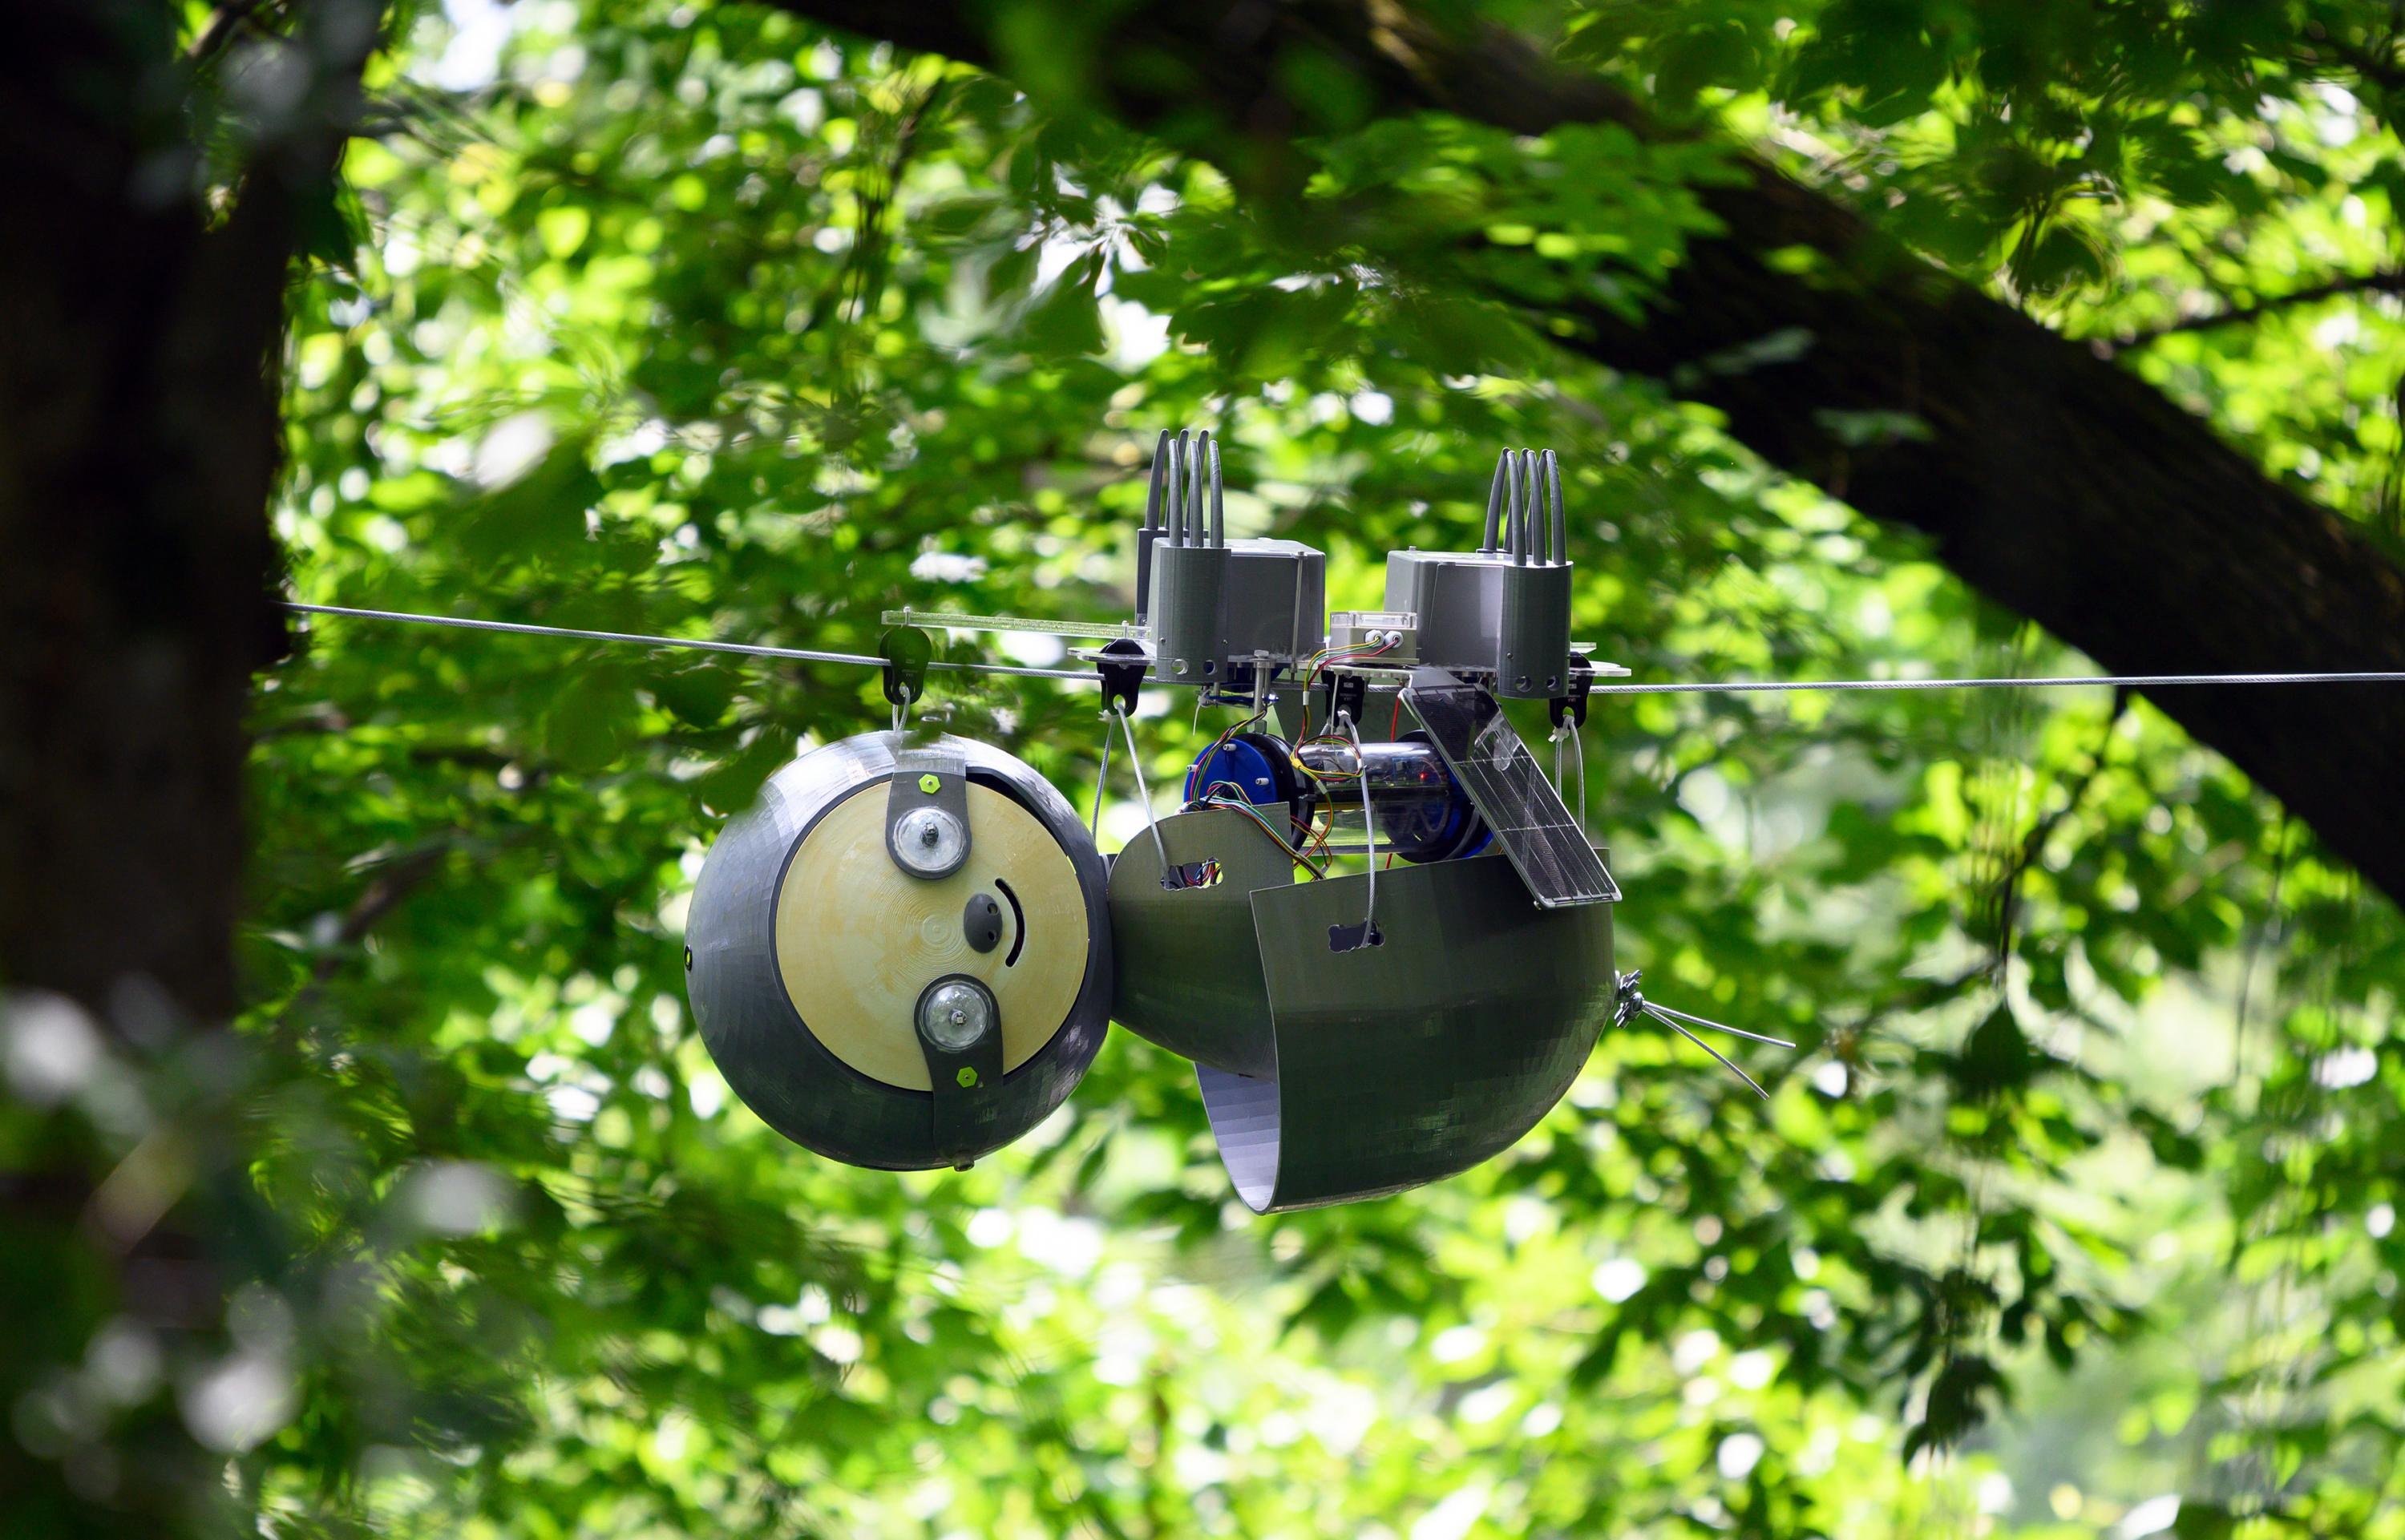 SlothBot the Garden' Demonstrates Hyper-Efficient Conservation Robot | Center